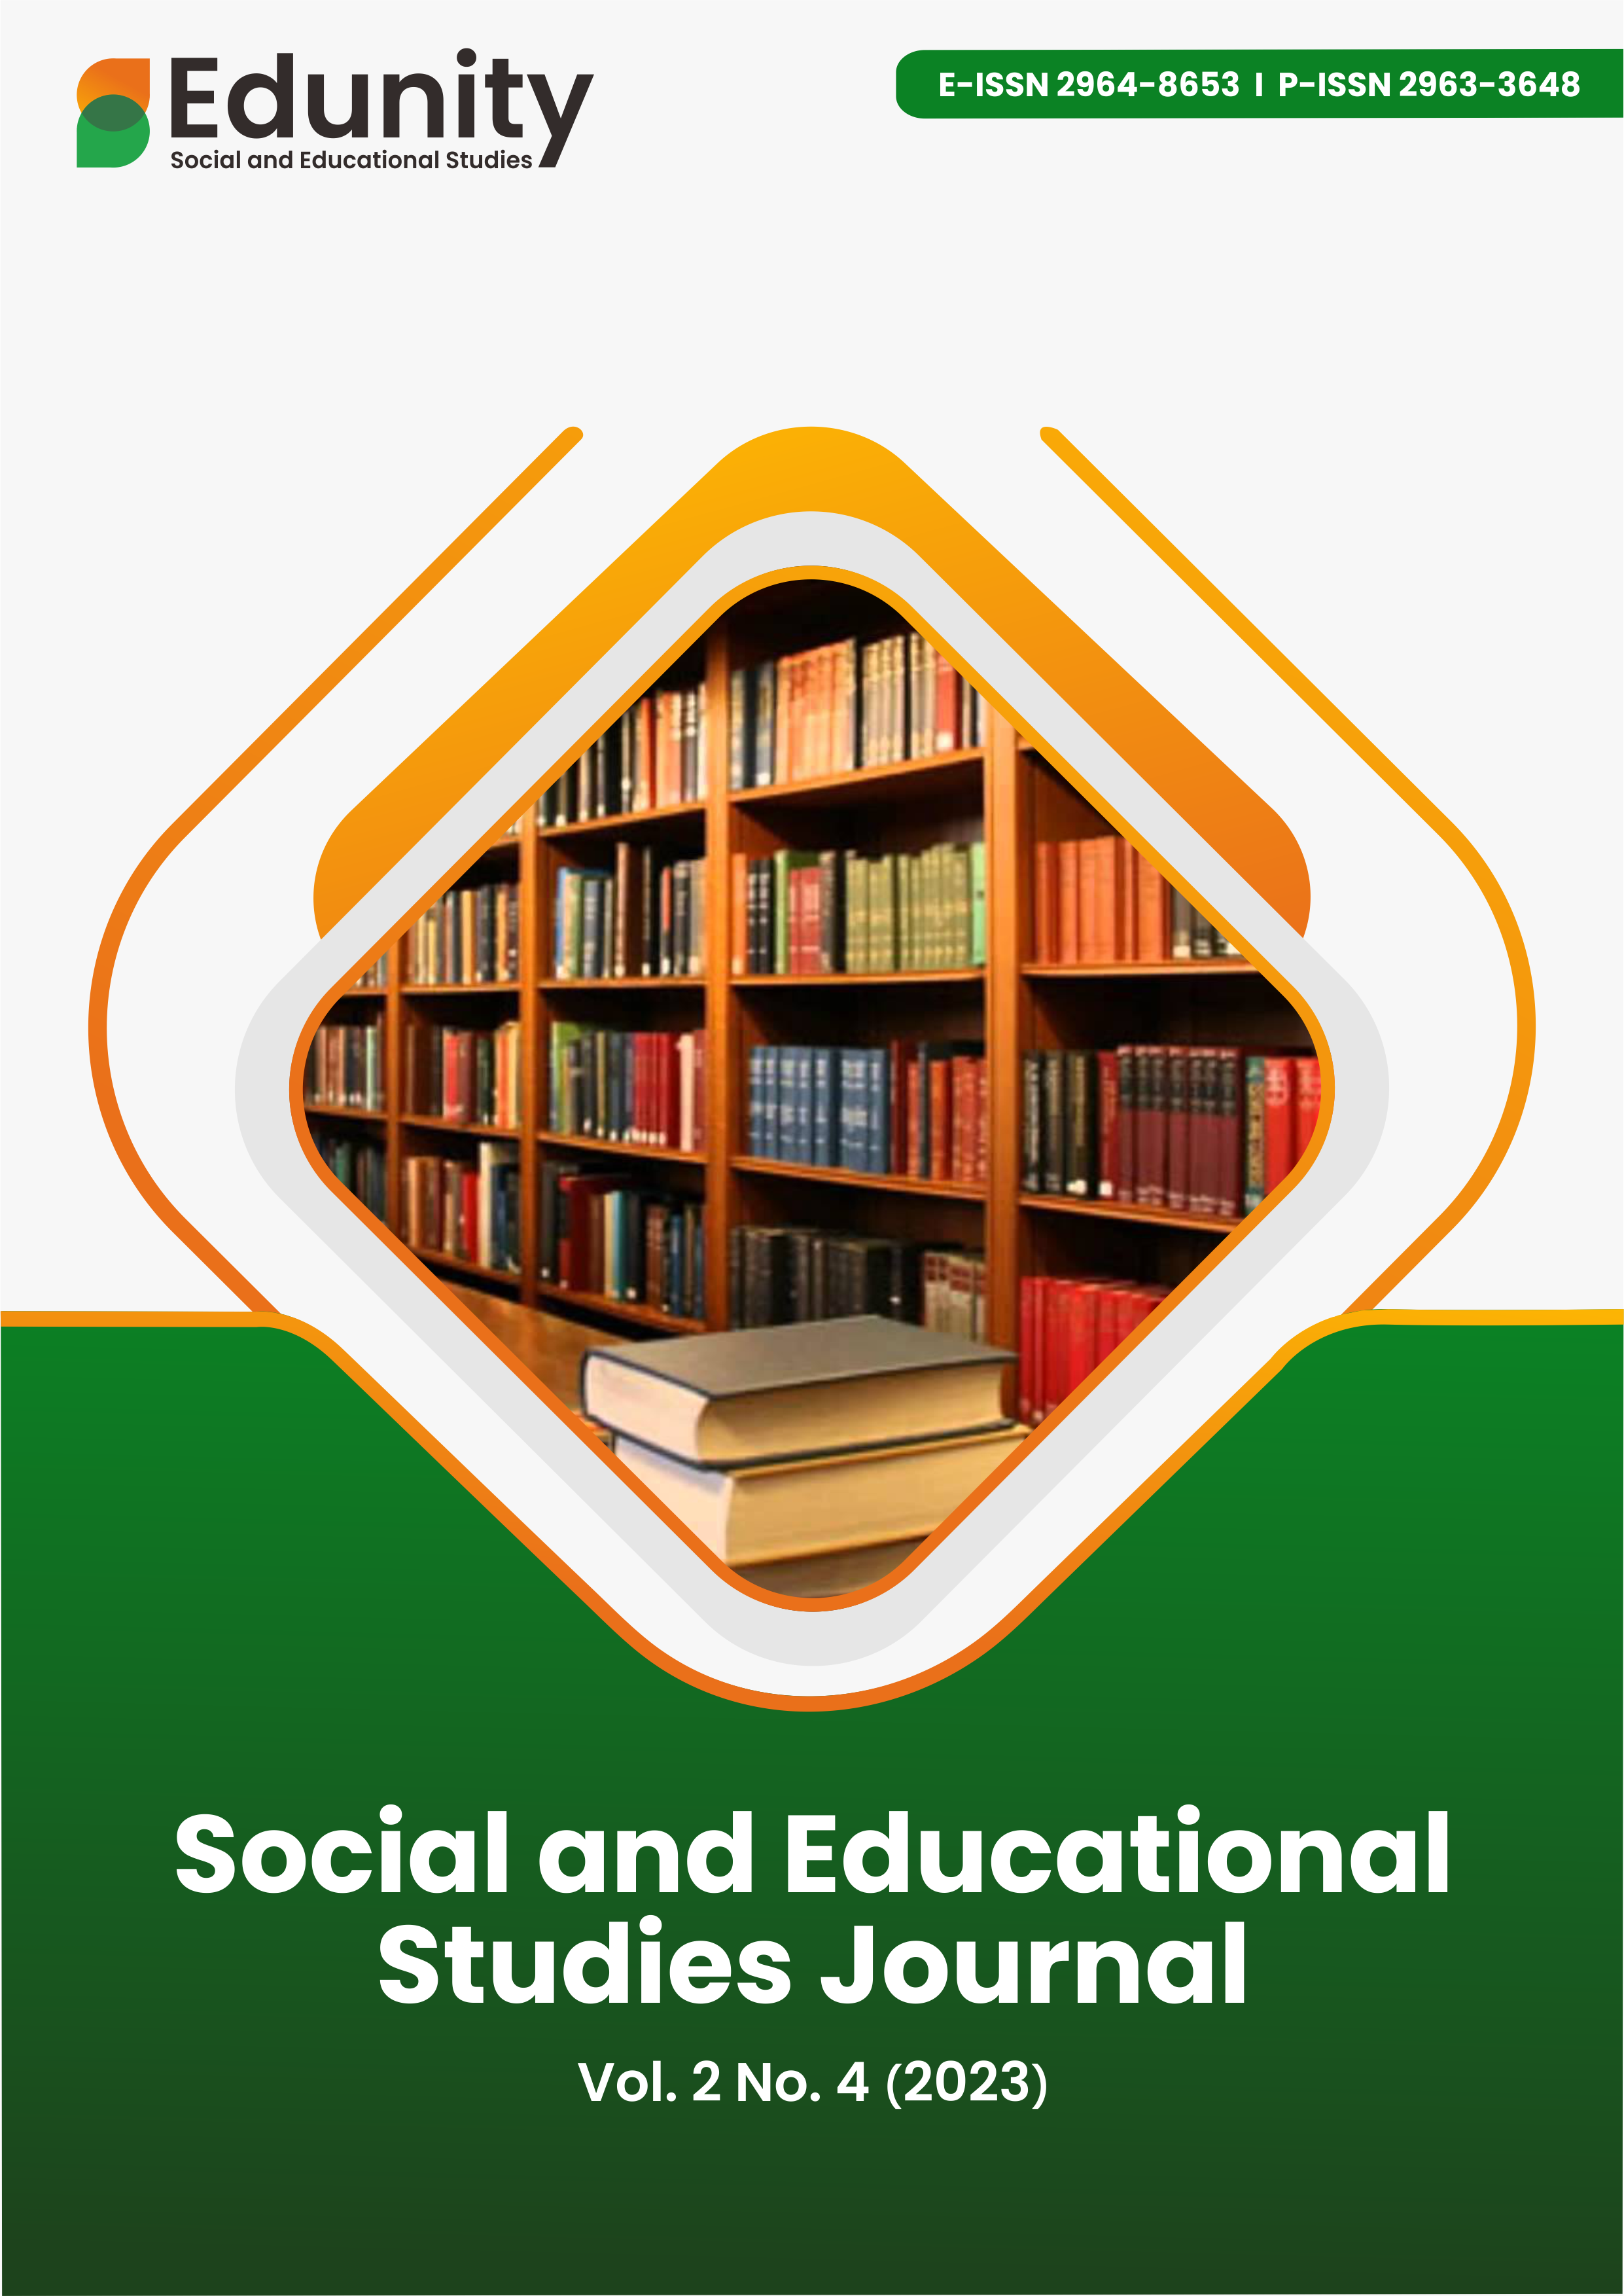 					View Vol. 2 No. 4 (2023): Edunity : Social and Educational Studies
				